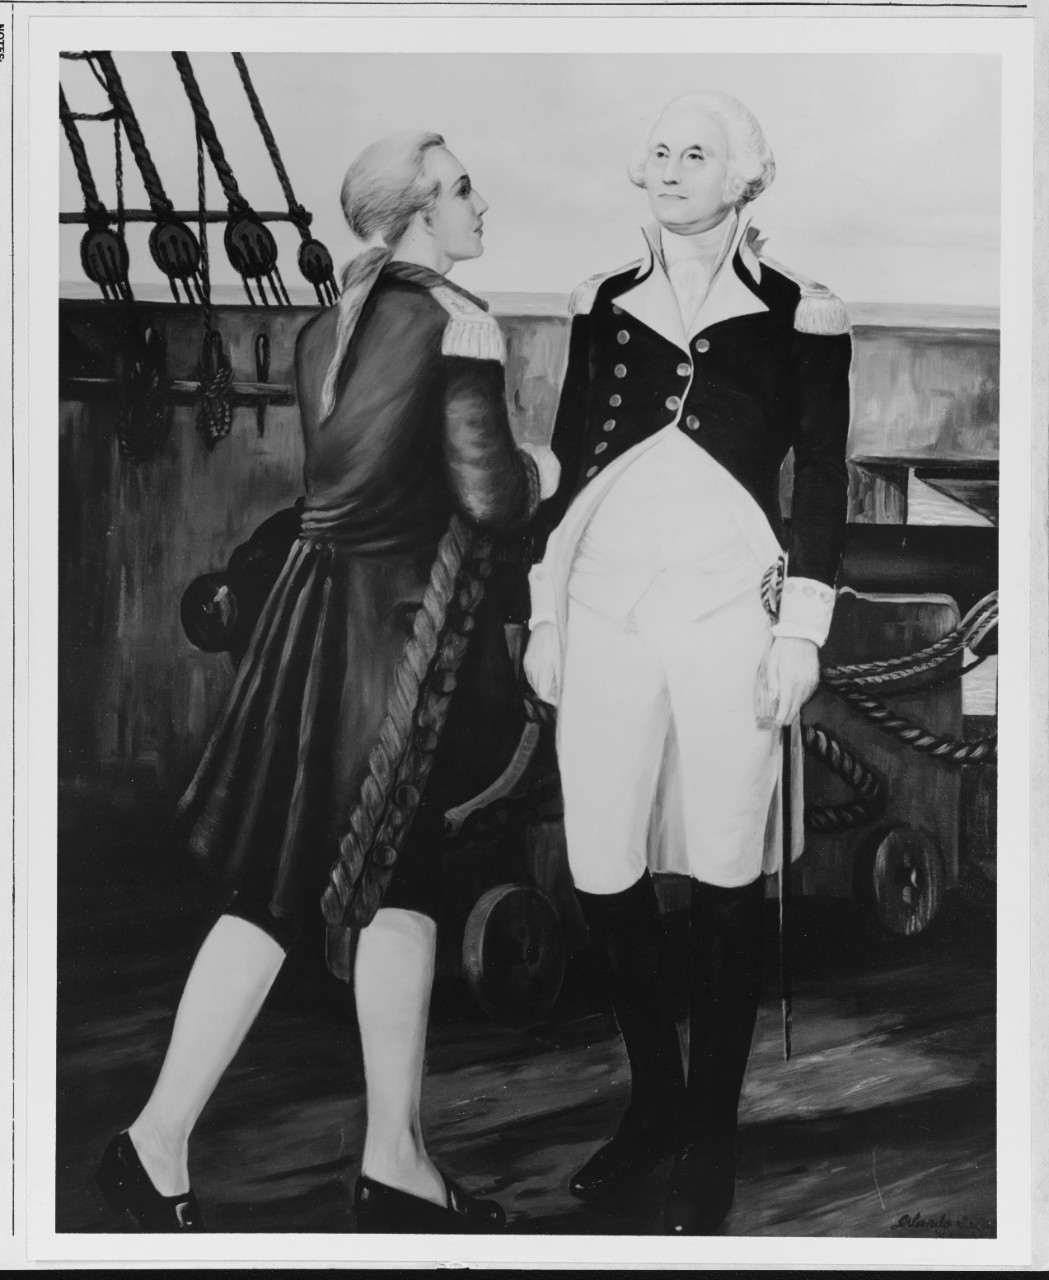 George Washington aboard ship - an oil painting by Orlando S. Lagman, USN (1965)